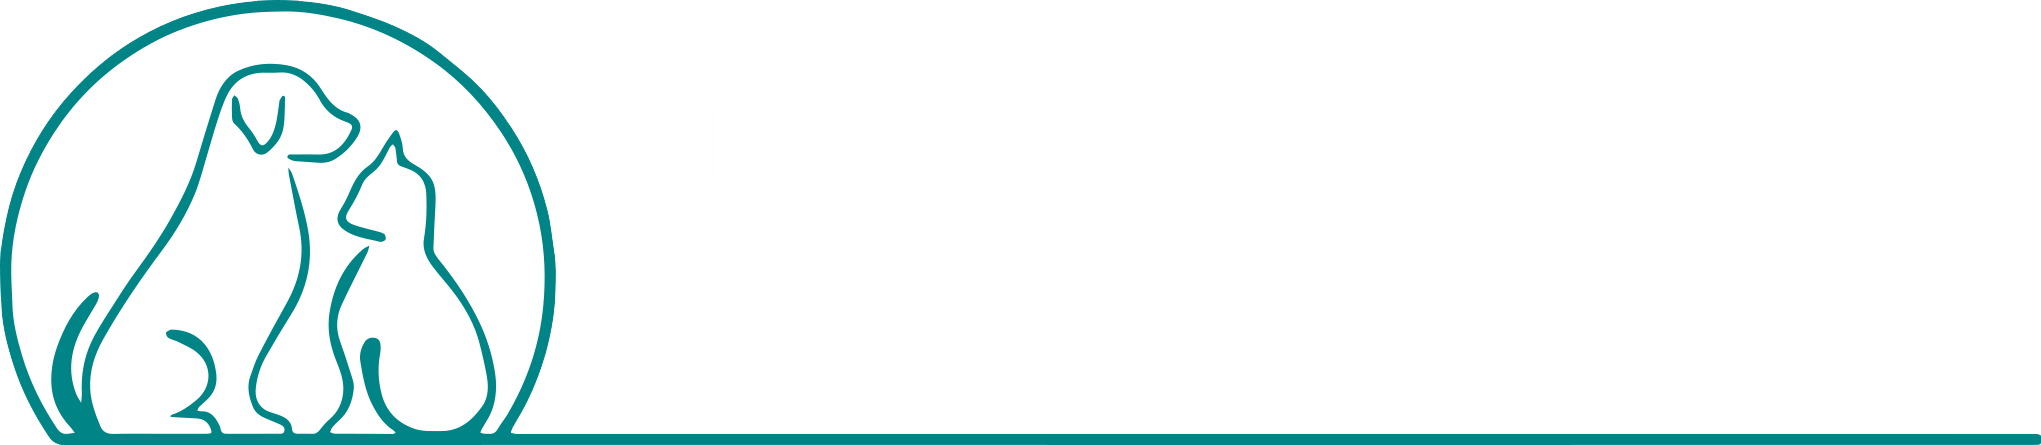 Logo Image for Blaine Central Veterinary Clinic